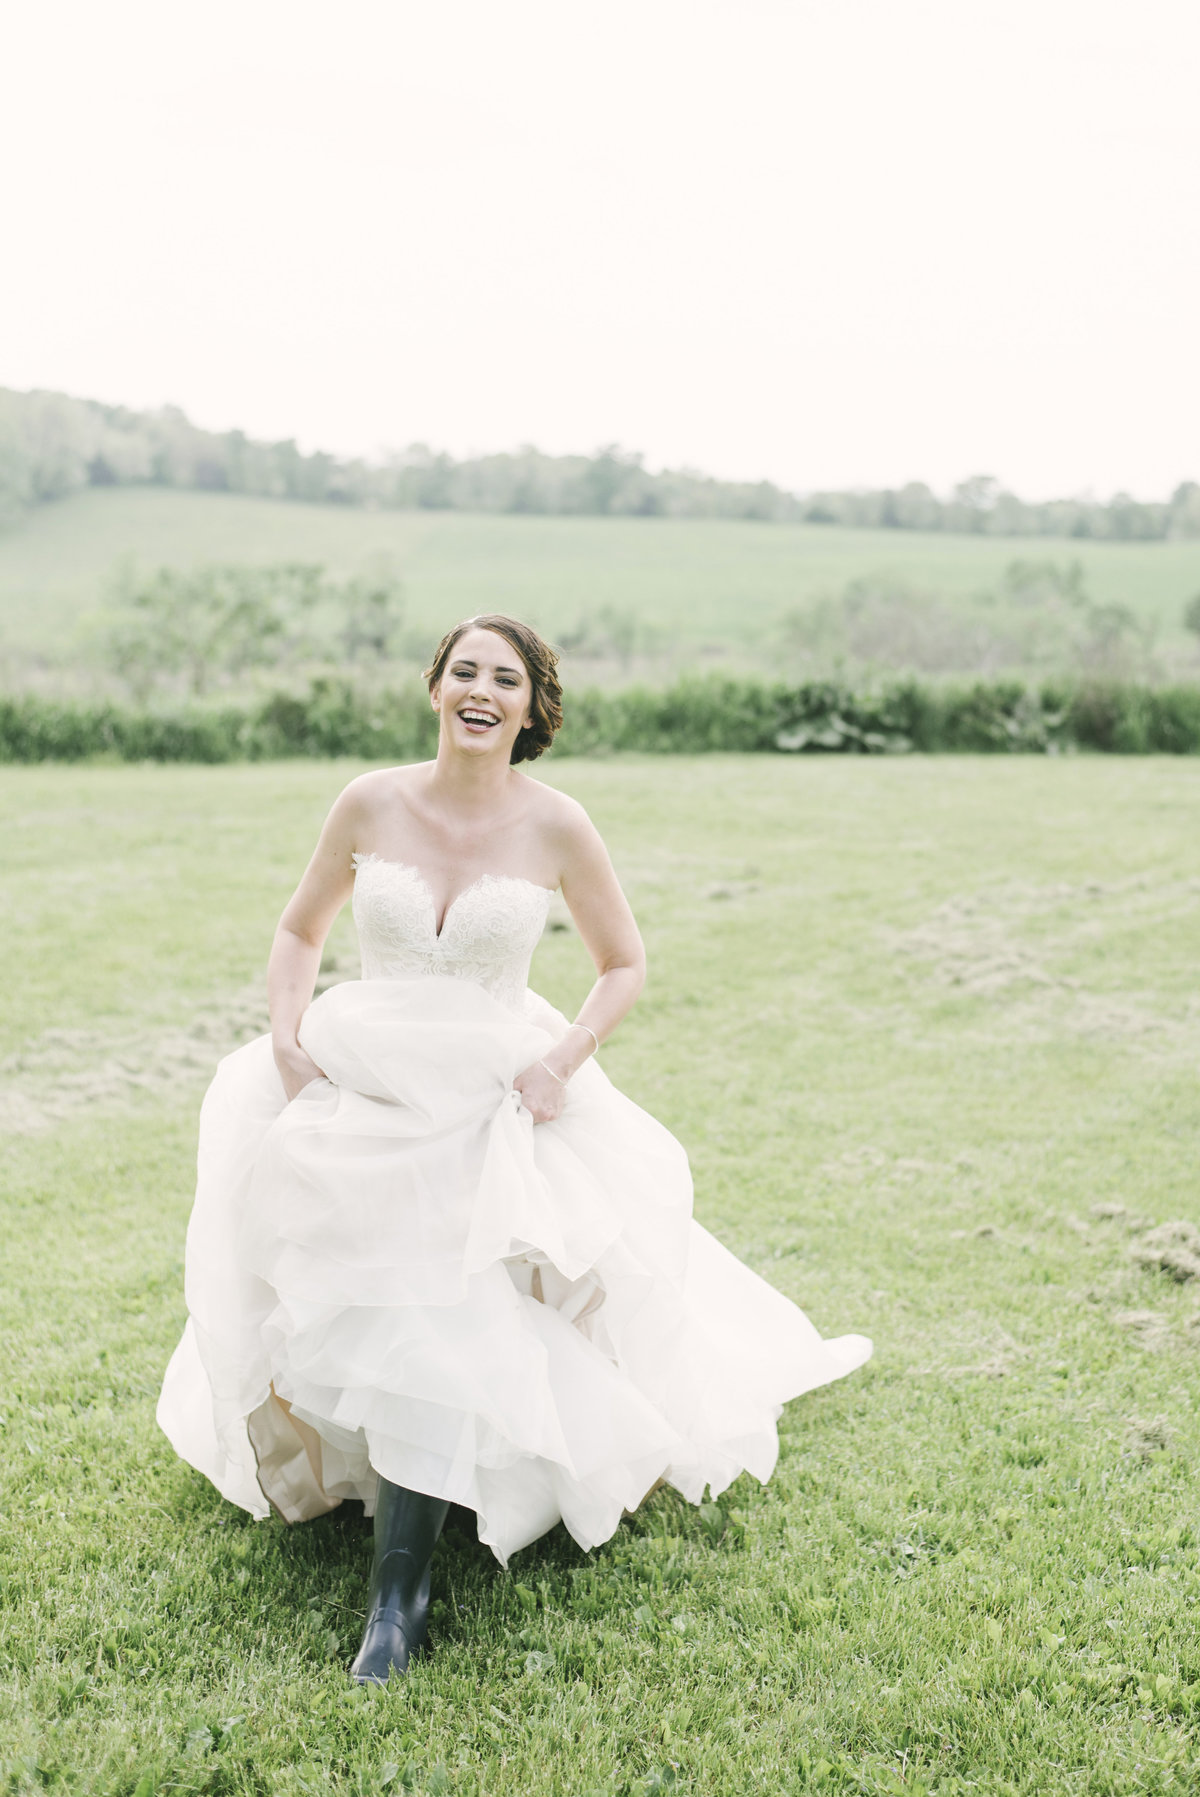 Monica-Relyea-Events-Alicia-King-Photography-Globe-Hill-Ronnybrook-Farm-Hudson-Valley-wedding-shoot-inspiration21